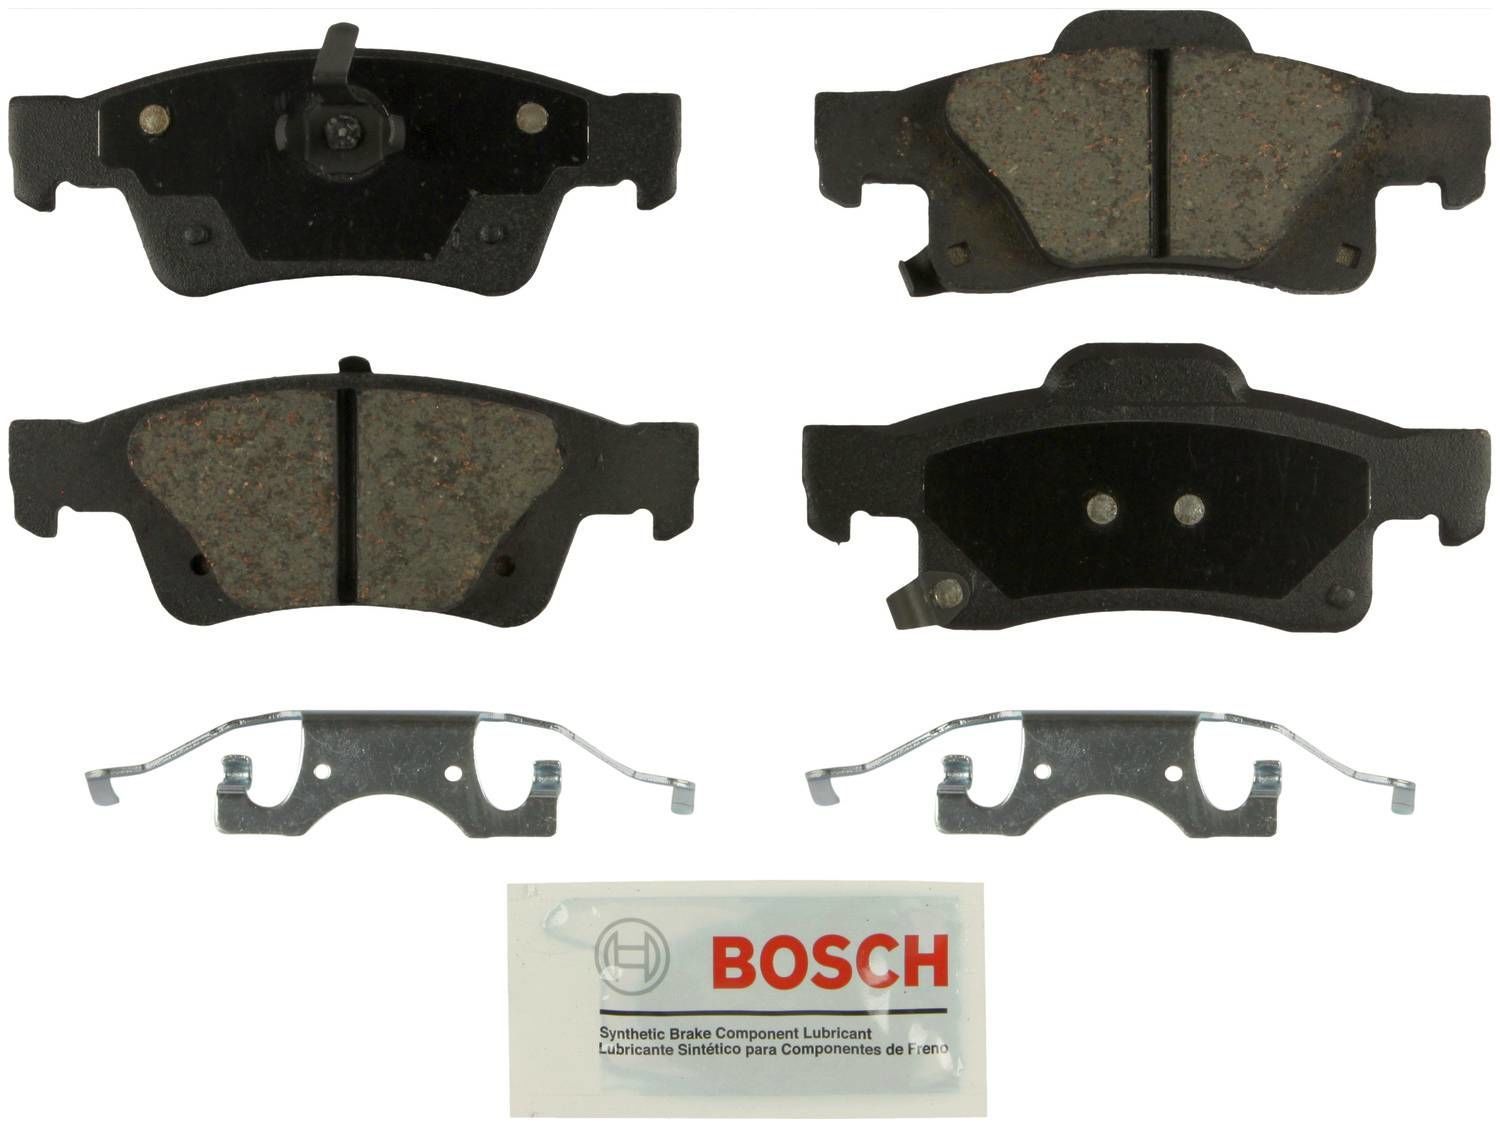 BOSCH BRAKE - Bosch Blue Ceramic Brake Pads with Hardware (Rear) - BQC BE1498H